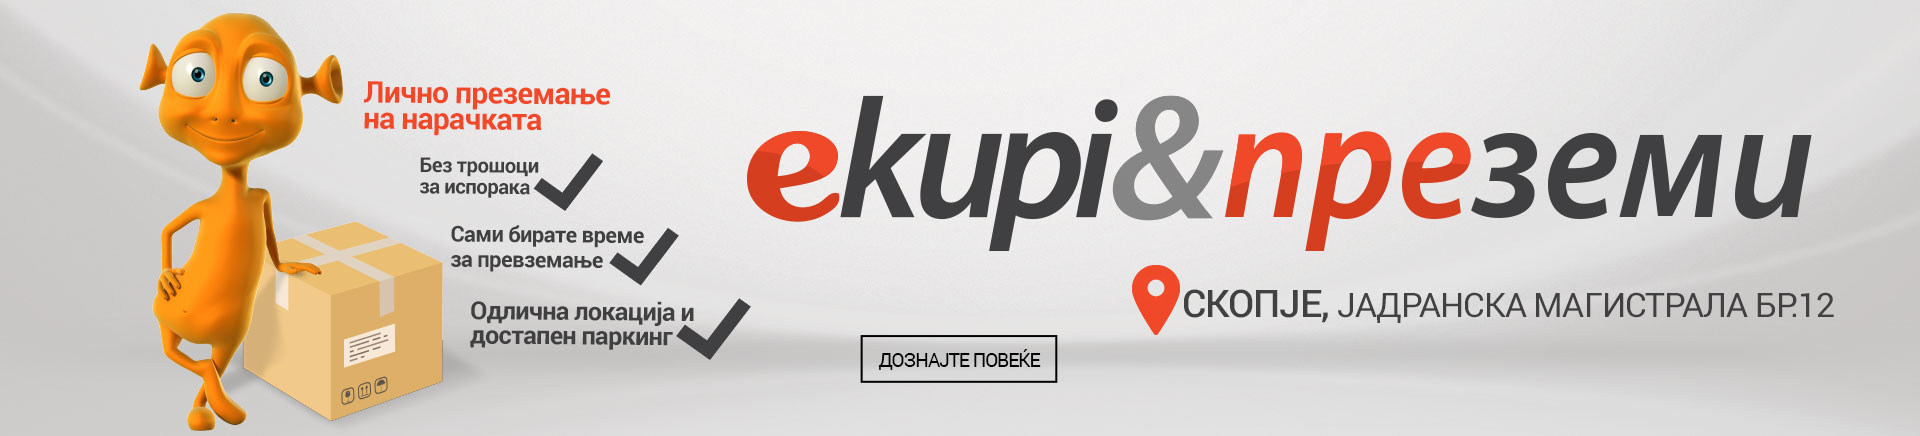 MK eKupi&amp;poKupi hybris banner final 2 TABLET 768 X 436.jpg